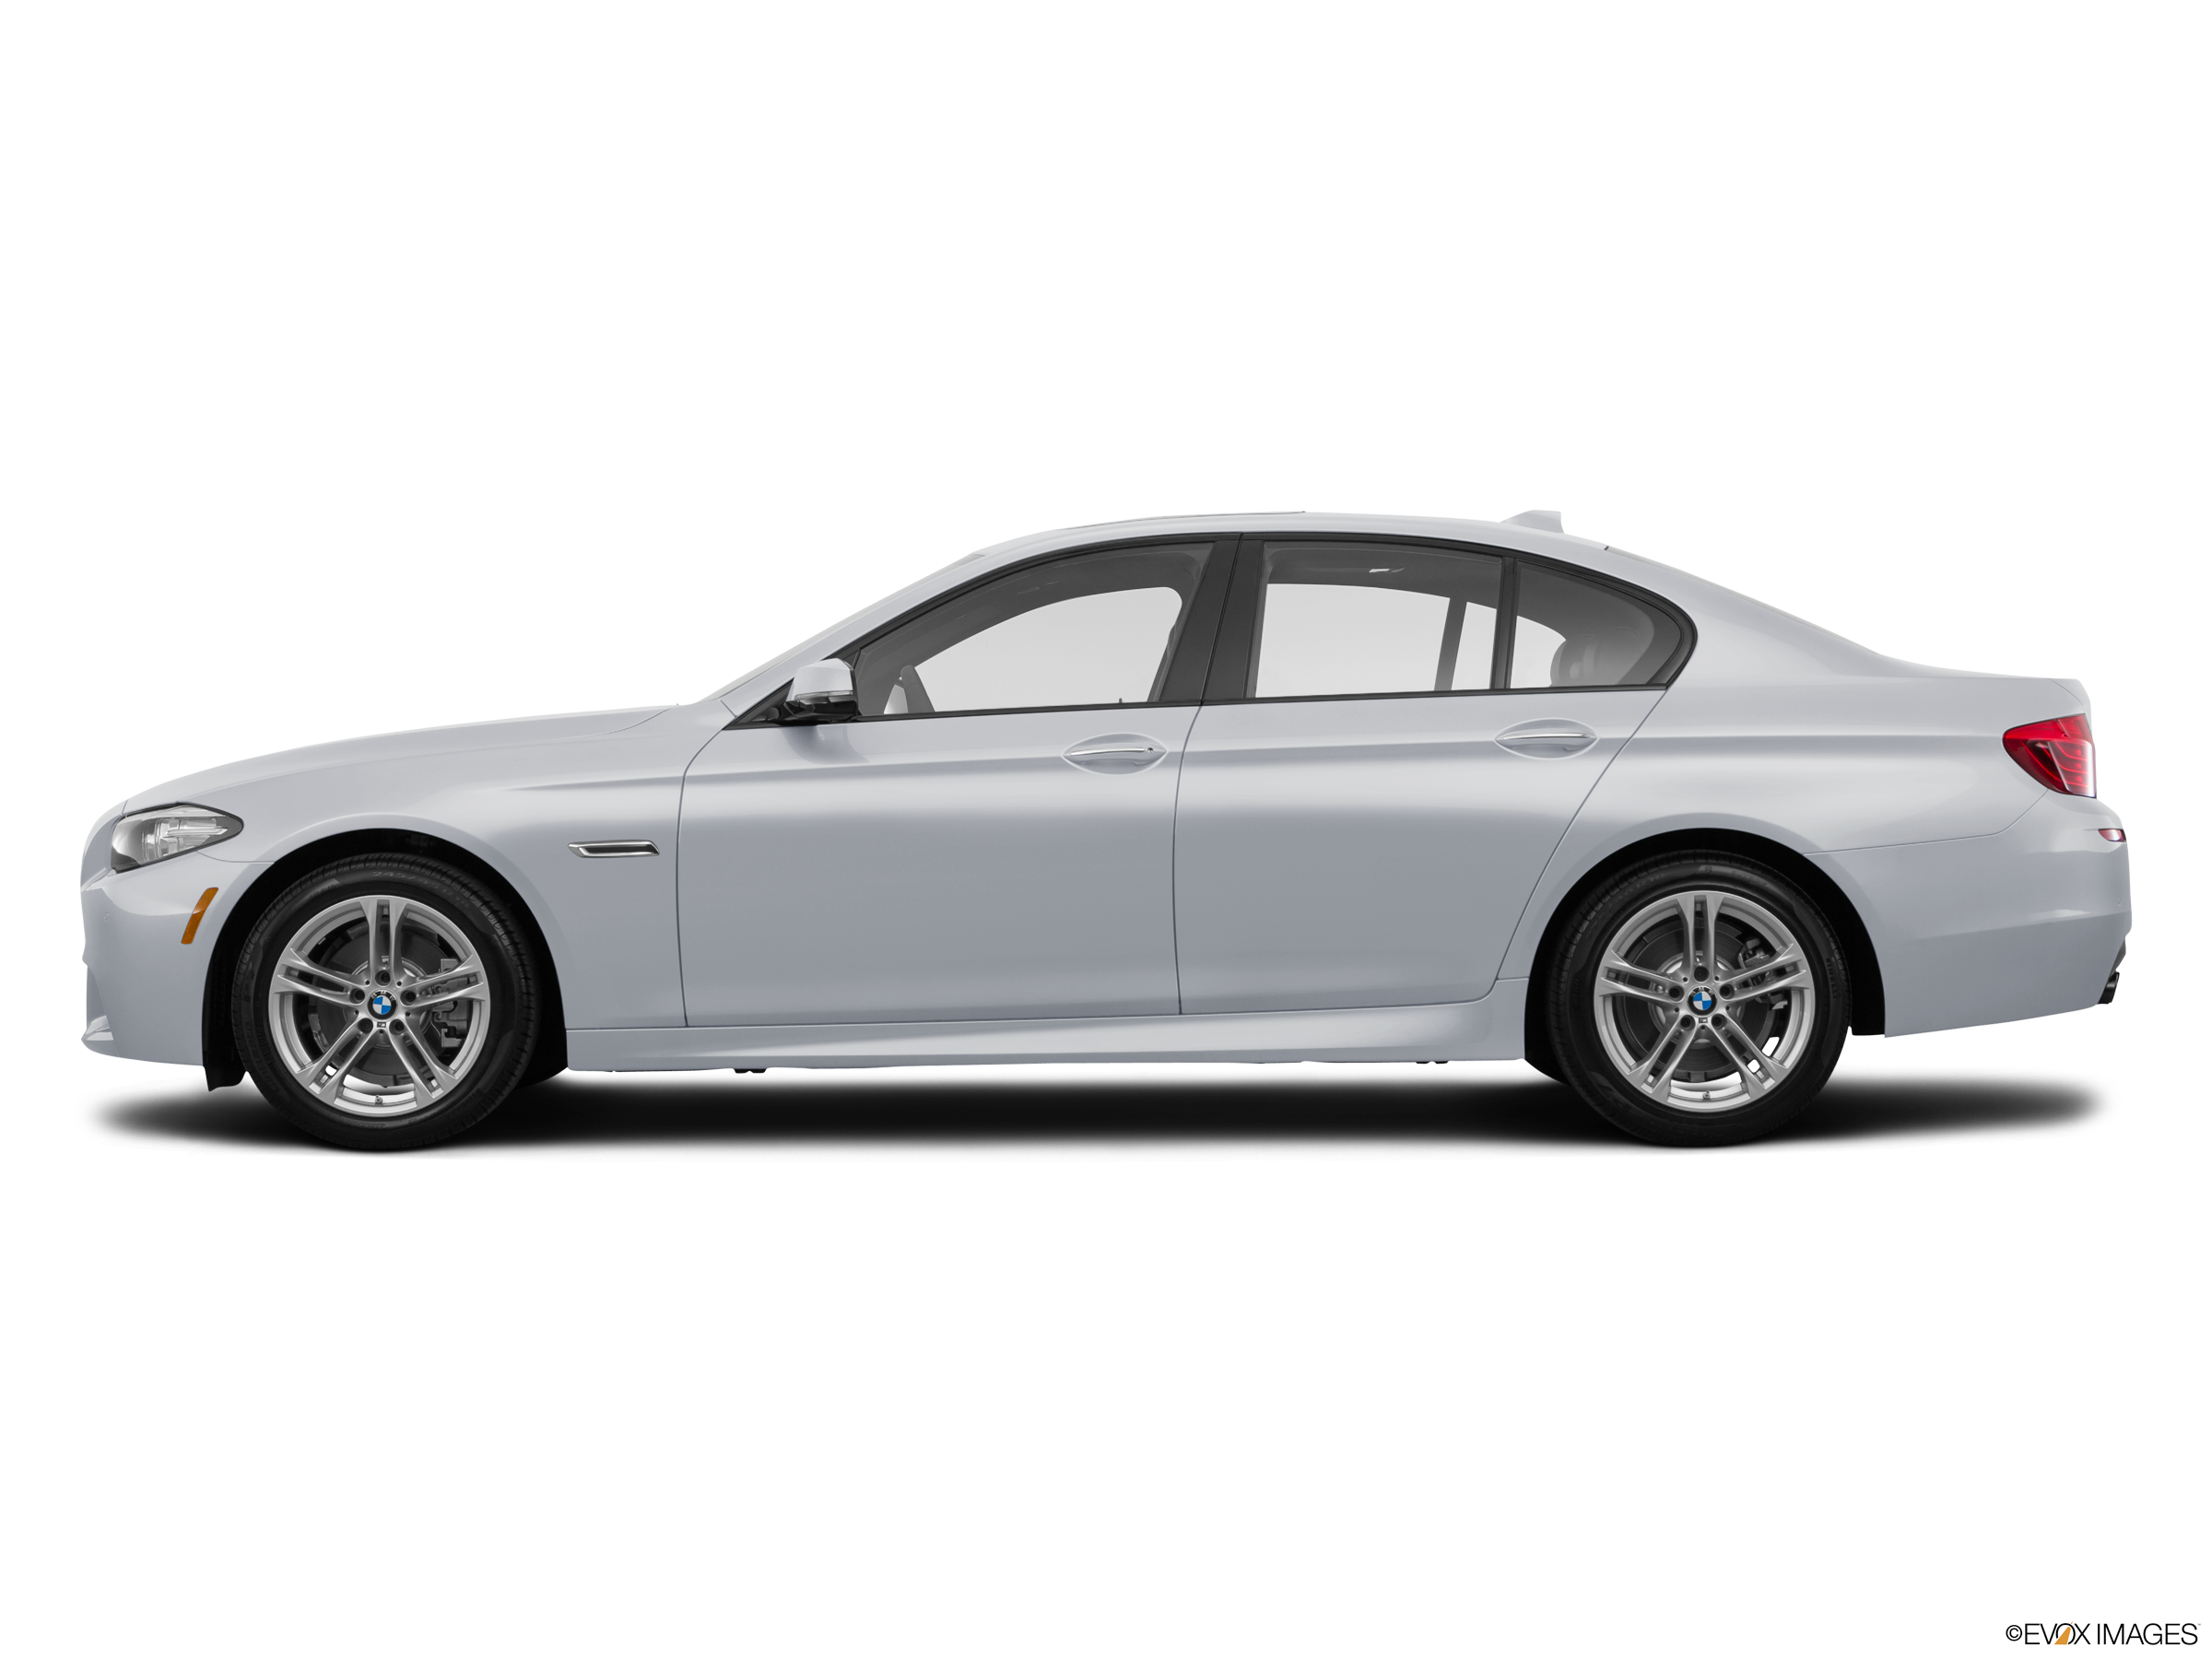 Weggooien sensor schieten 2016 BMW 5 Series Values & Cars for Sale | Kelley Blue Book